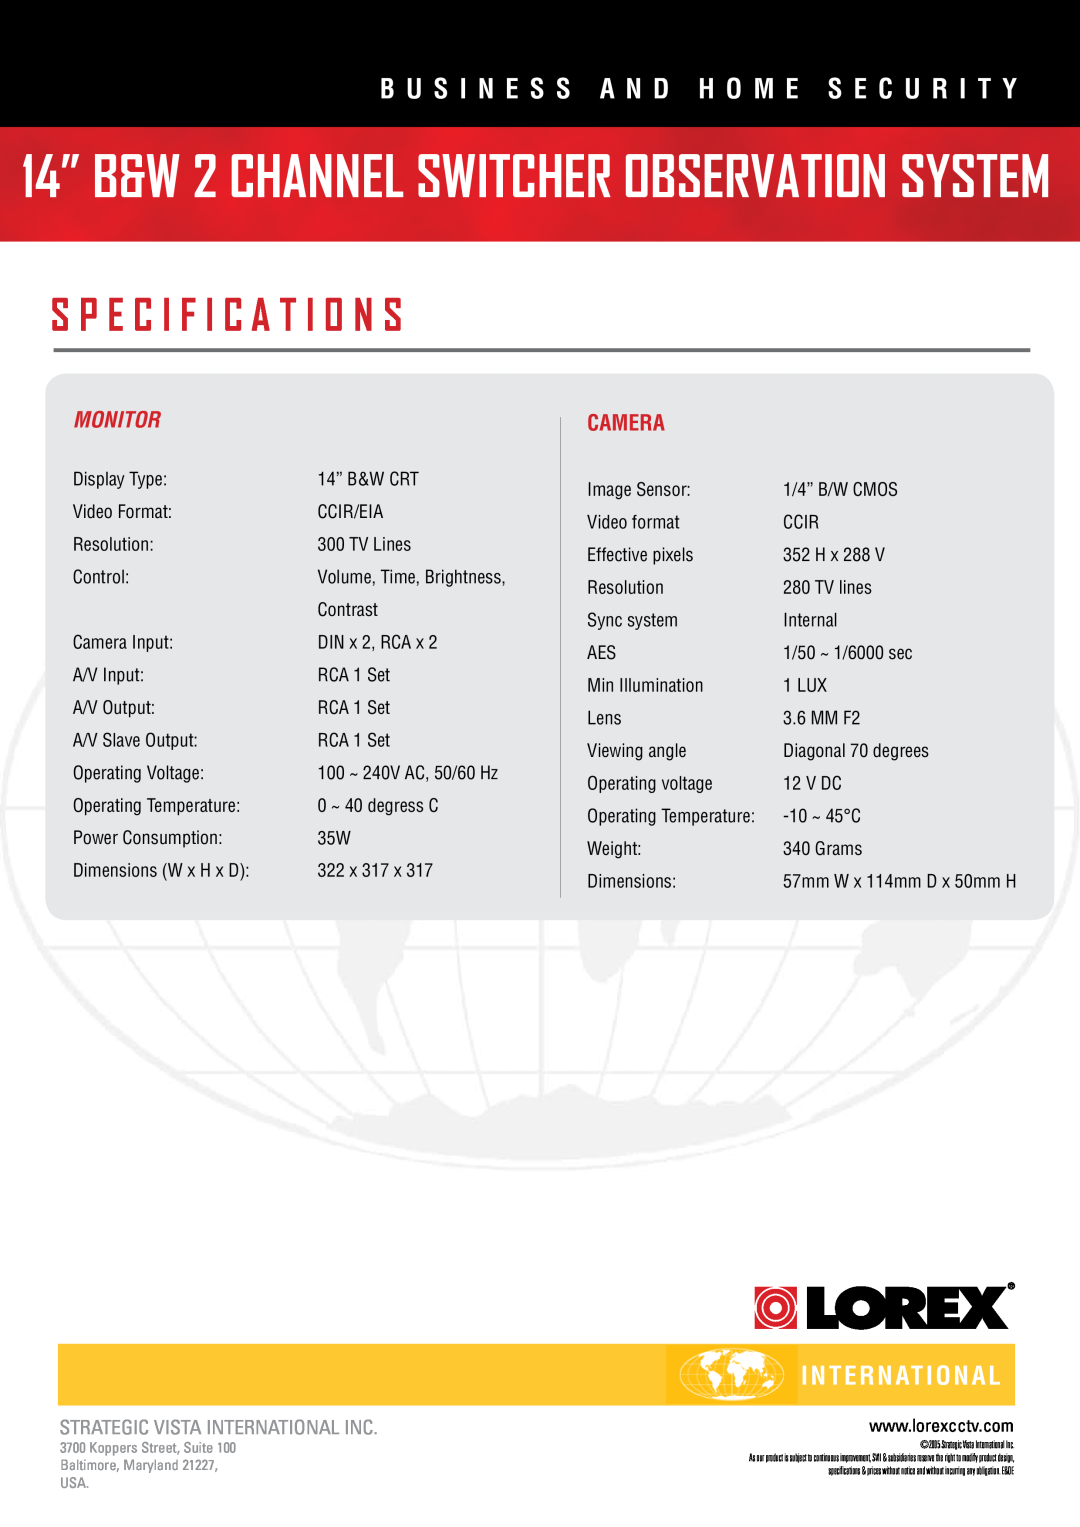 LOREX Technology SG14S1022P International International, 14” B&W 2 CHANNEL SWITCHER OBSERVATION SYSTEM, Monitor, Camera 